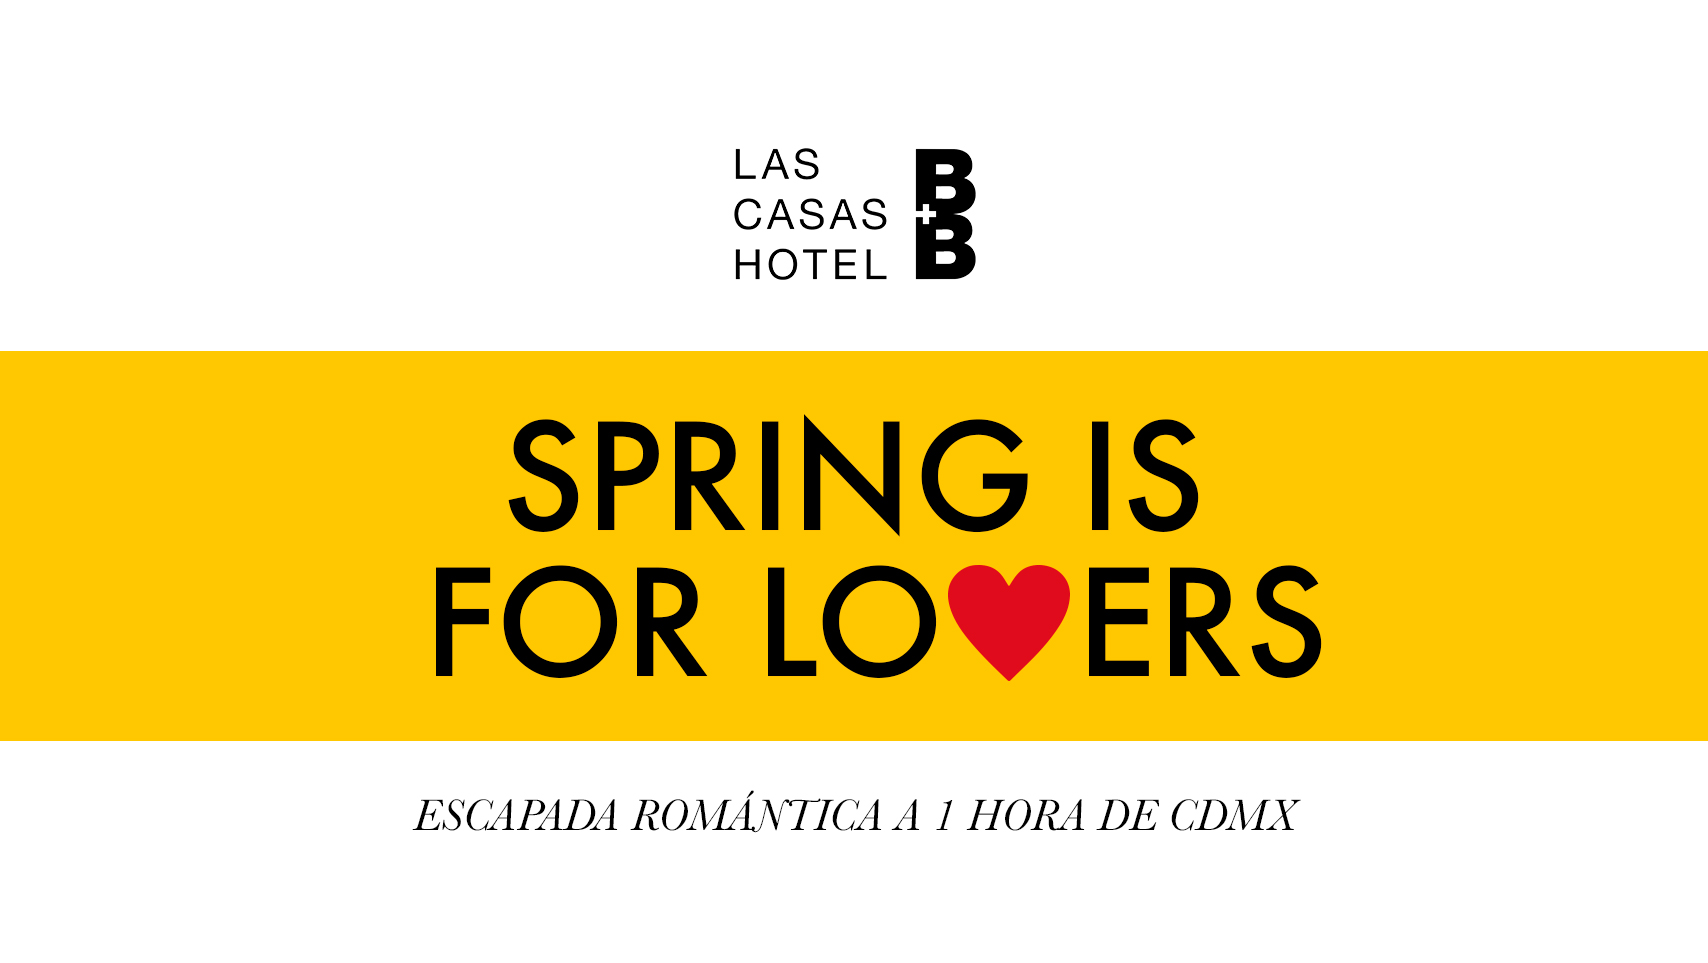 Las Casas B+B Hotel | HOME